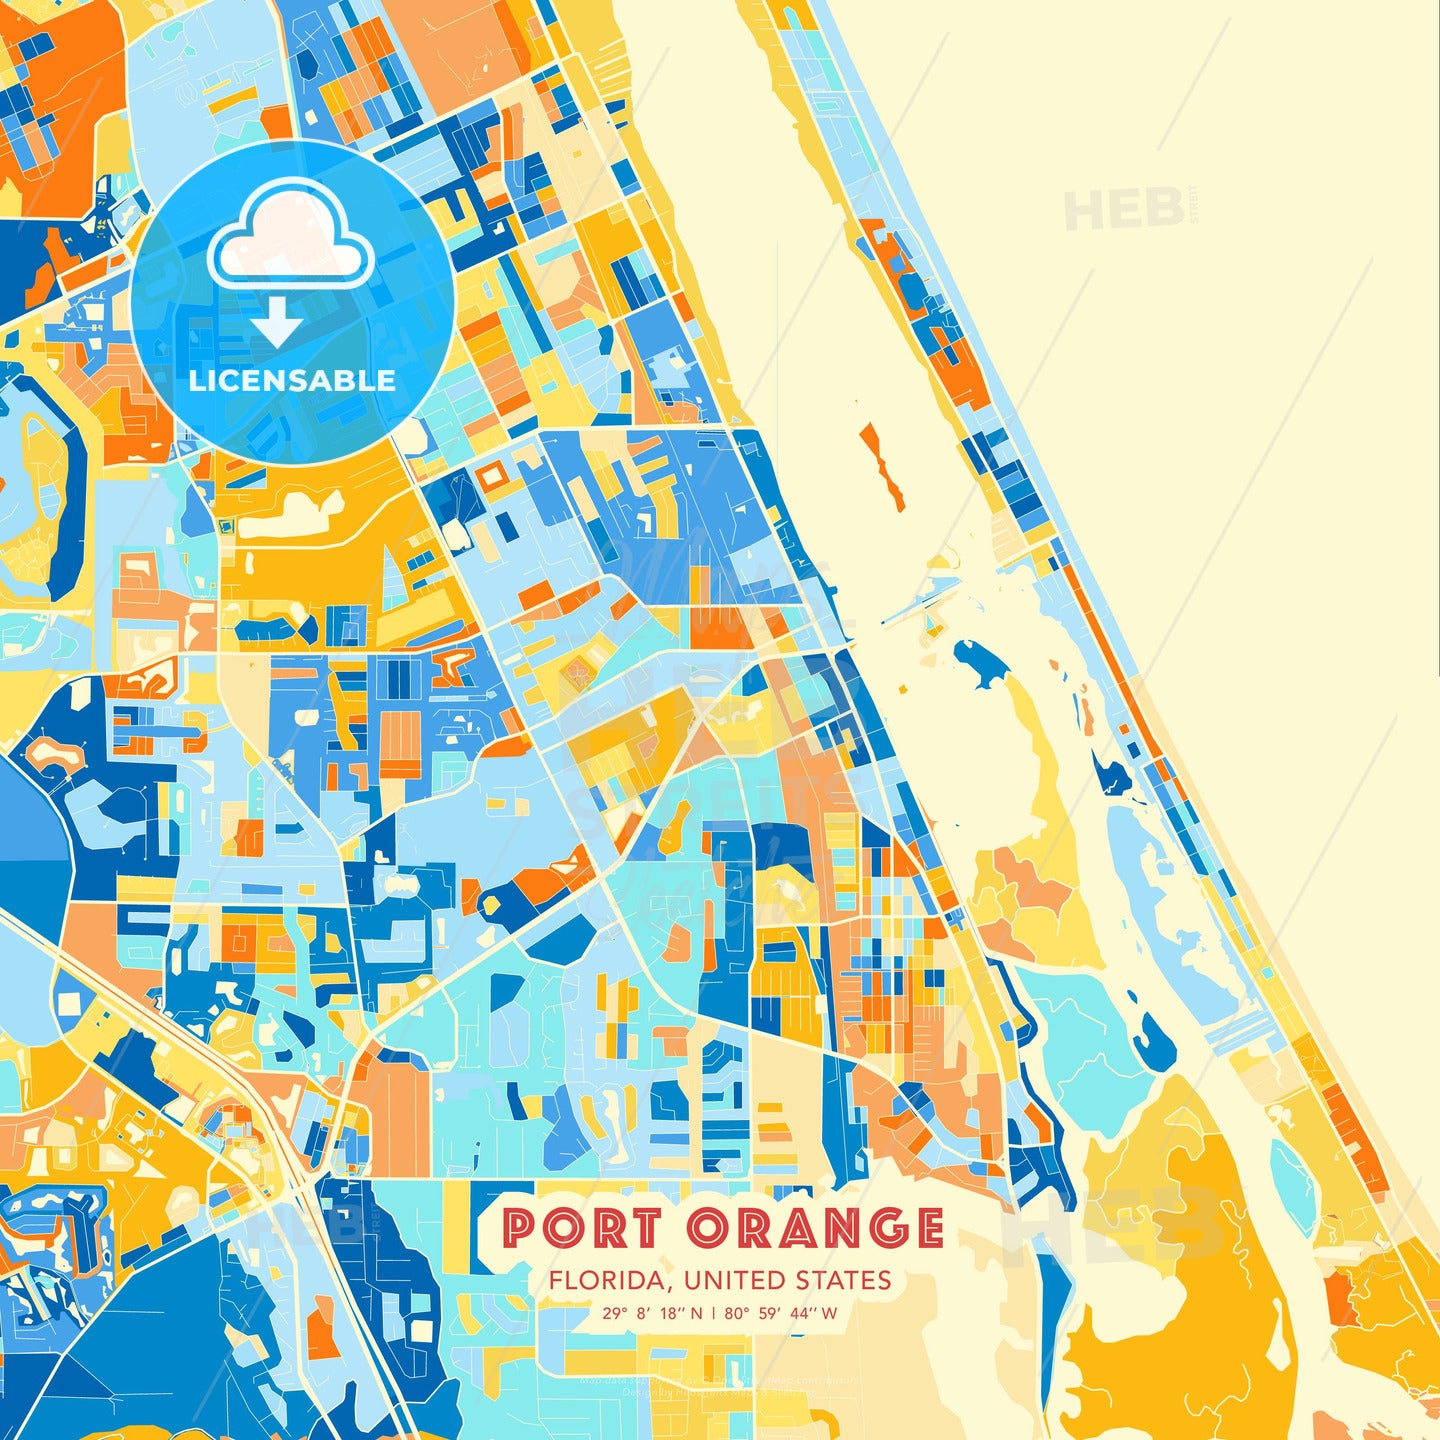 Port Orange, Florida, United States, map - HEBSTREITS Sketches